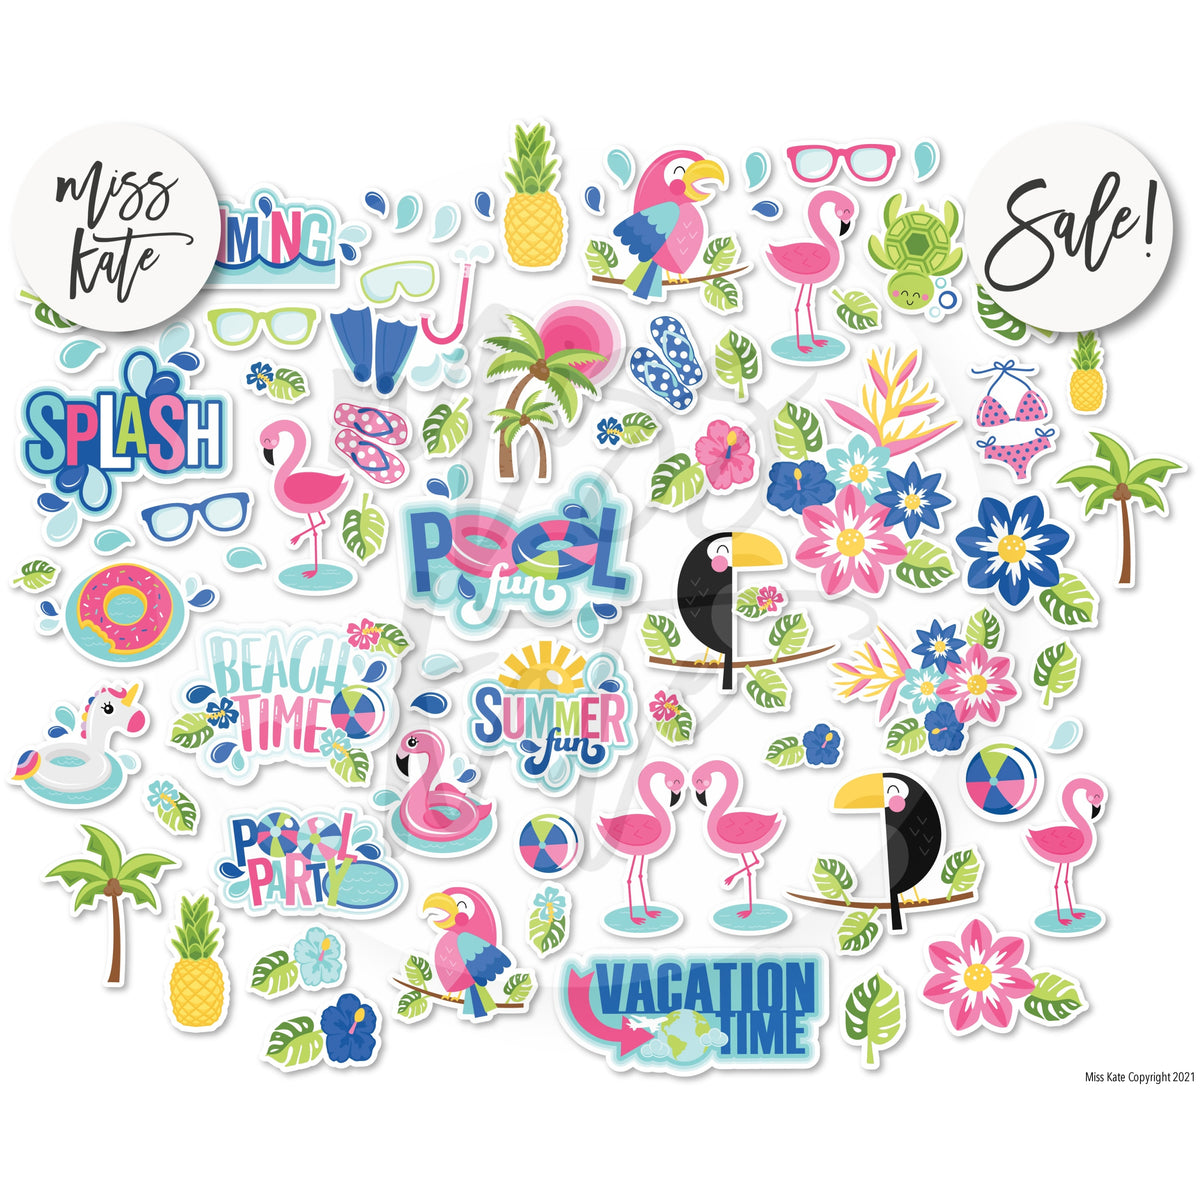 I Do - for Wedding - Scrapbook Paper & Sticker Kit – MISS KATE